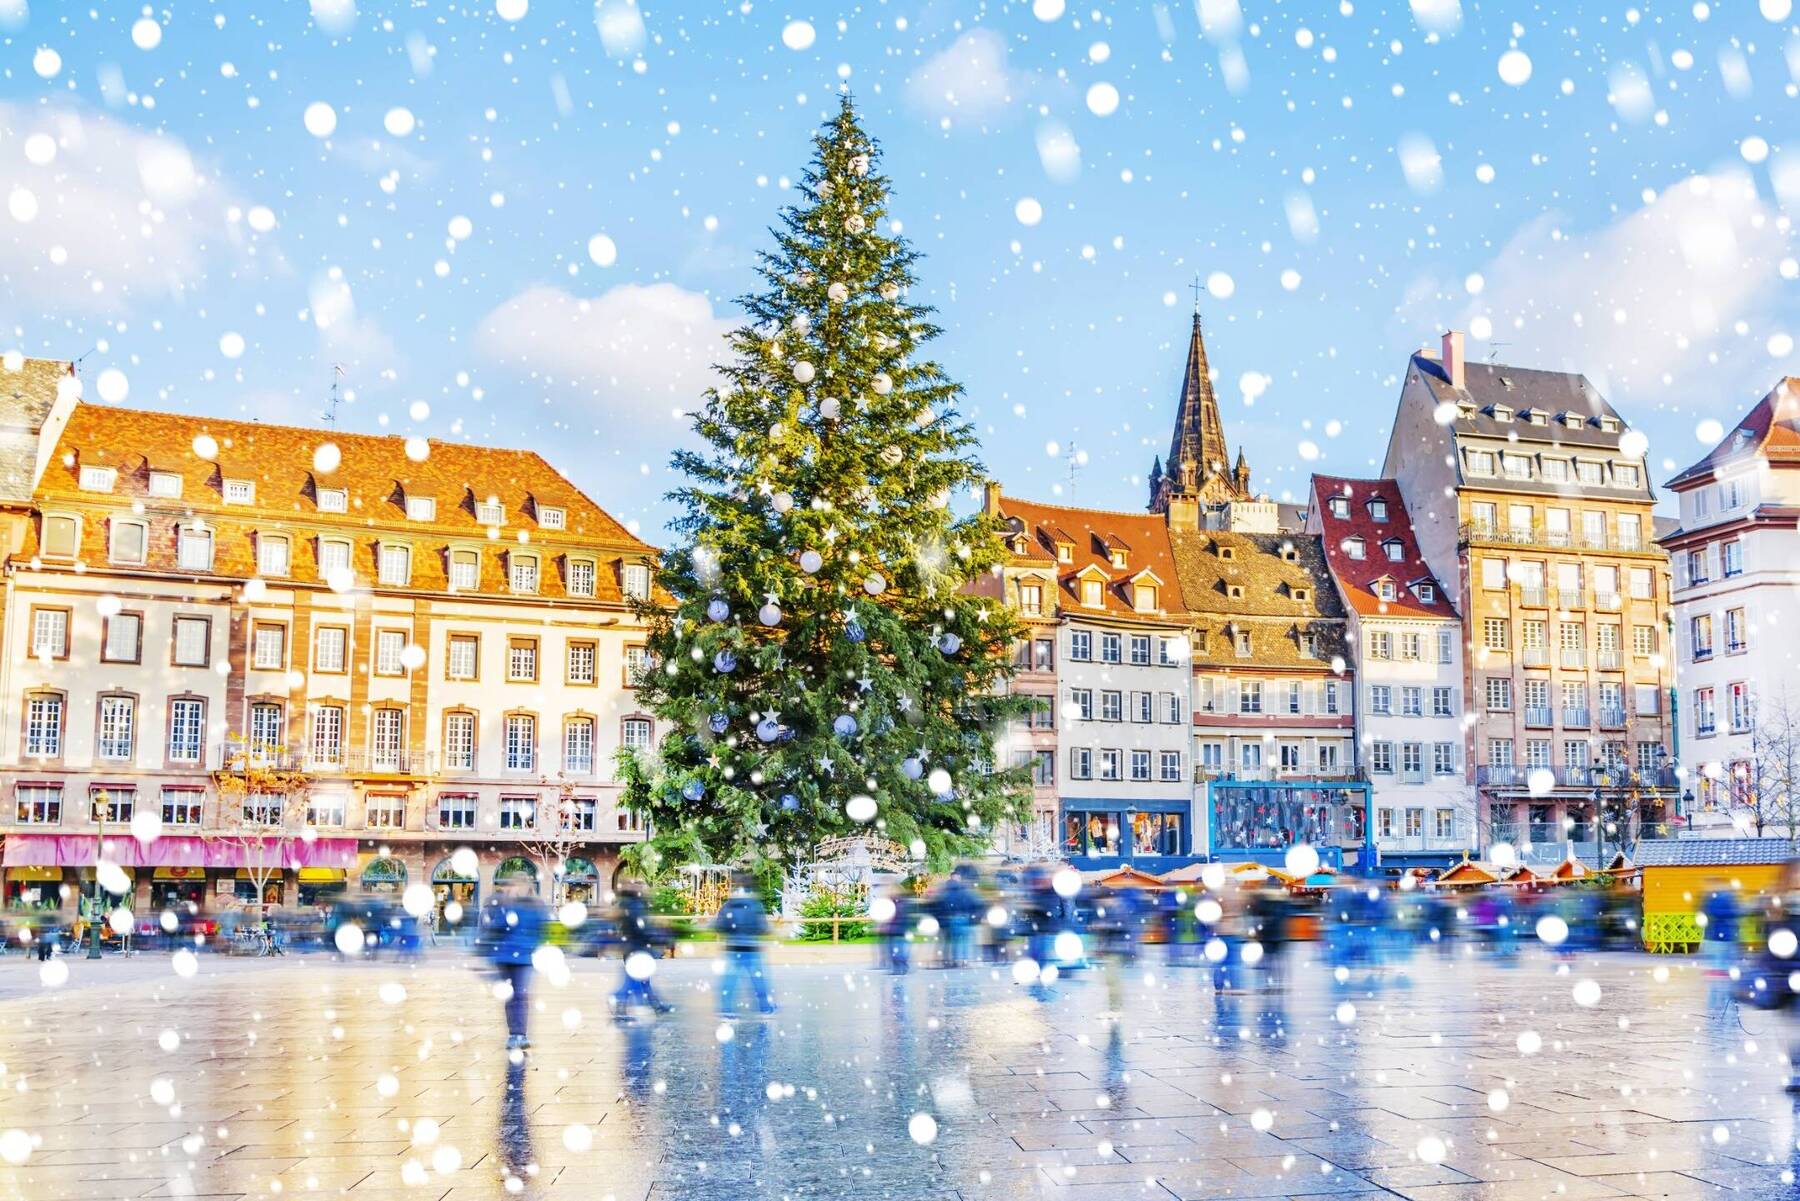 Europe’s Most Festive Christmas Markets 